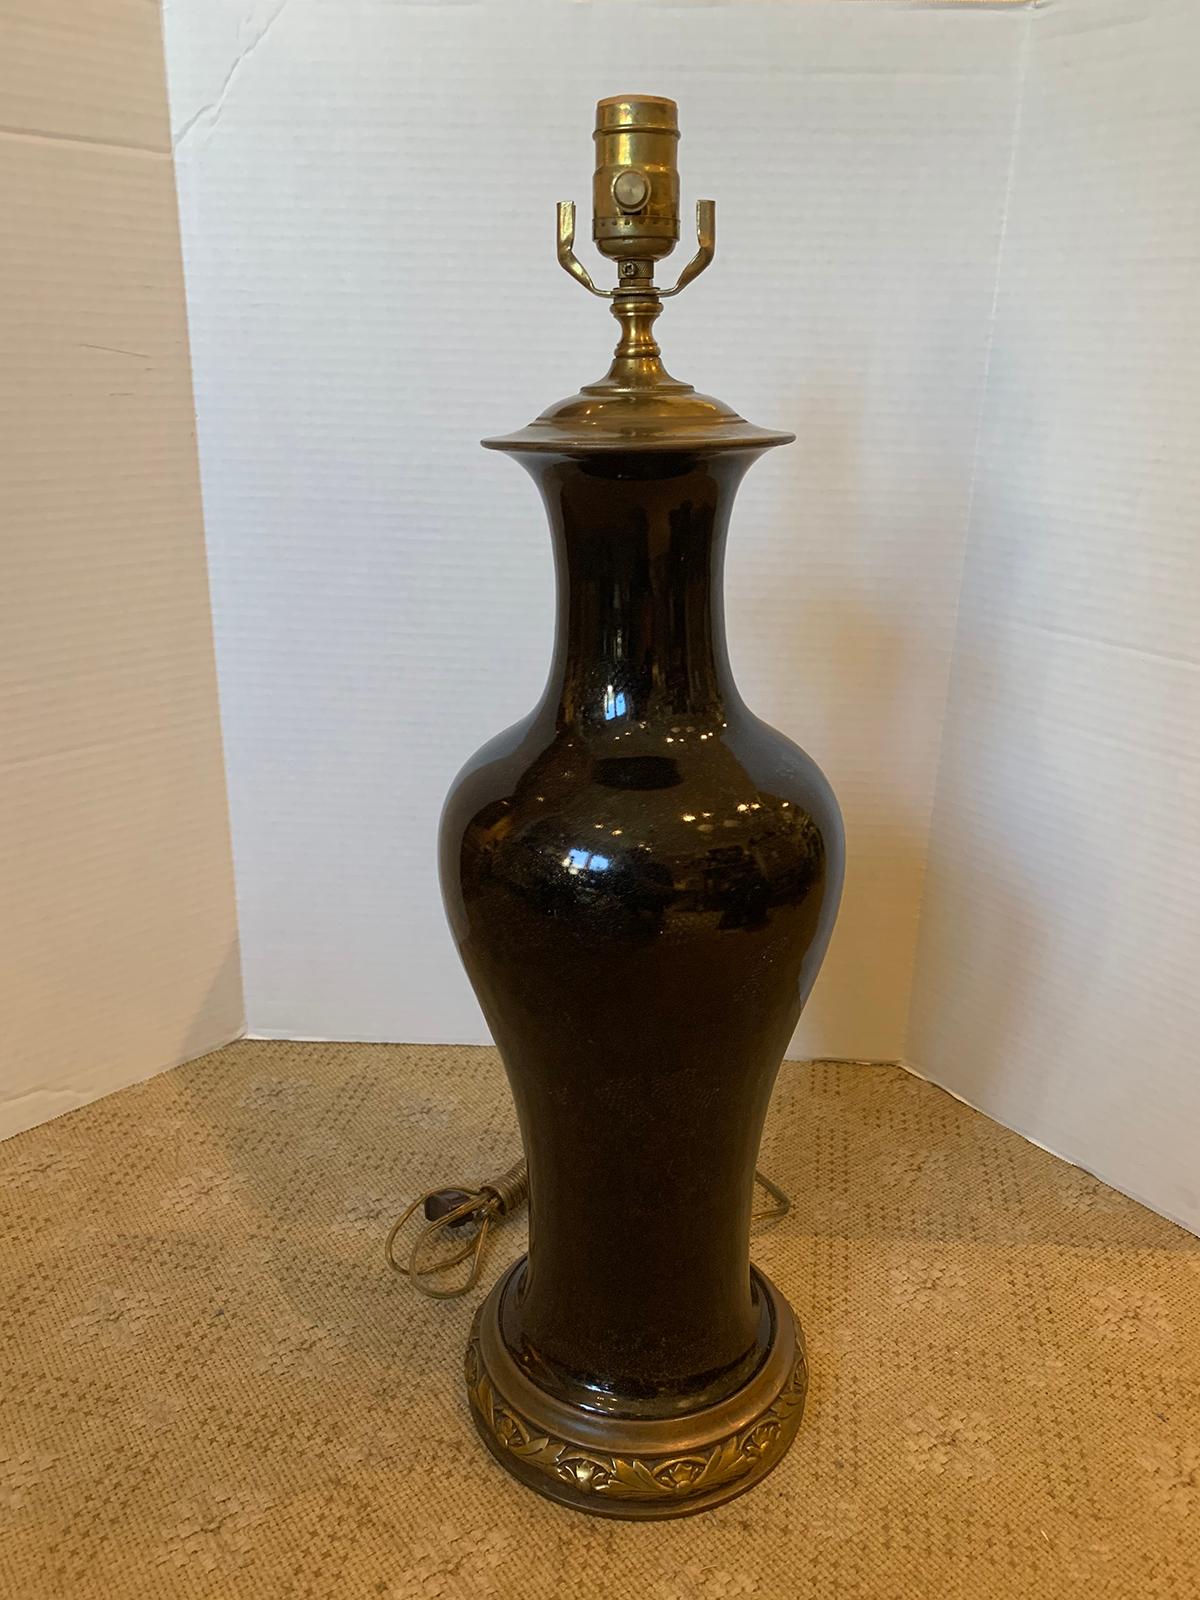 19th century Chinese black mirror porcelain vase as lamp
New wiring.